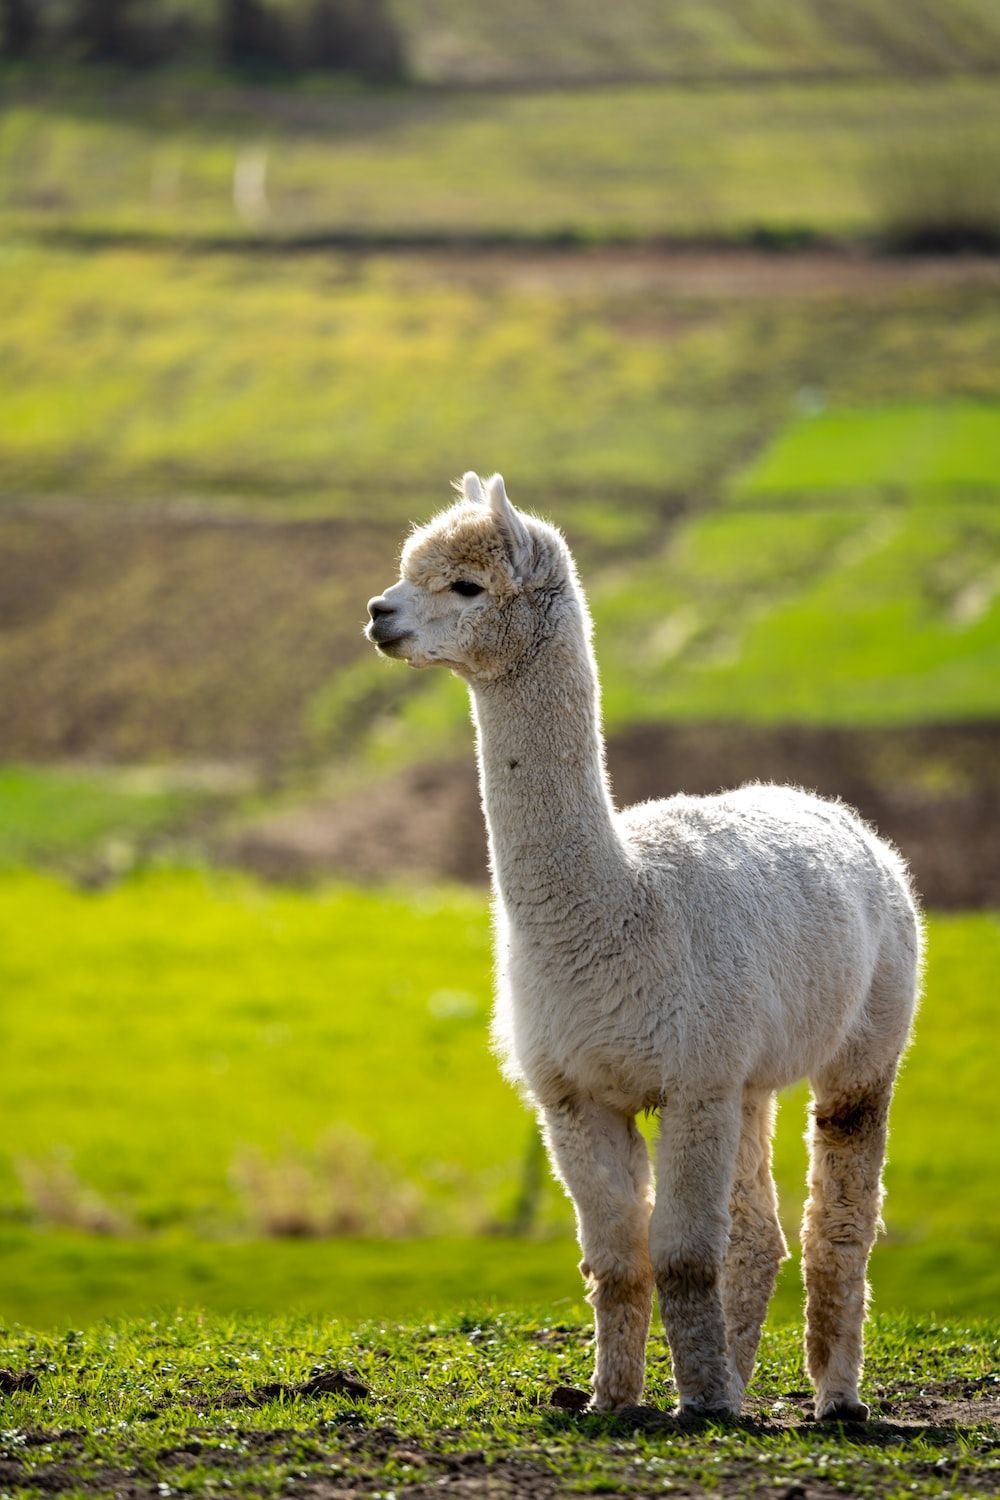  Alpaka Hintergrundbild 1000x1500. Foto zum Thema weißes Lama tagsüber auf grünem Rasen